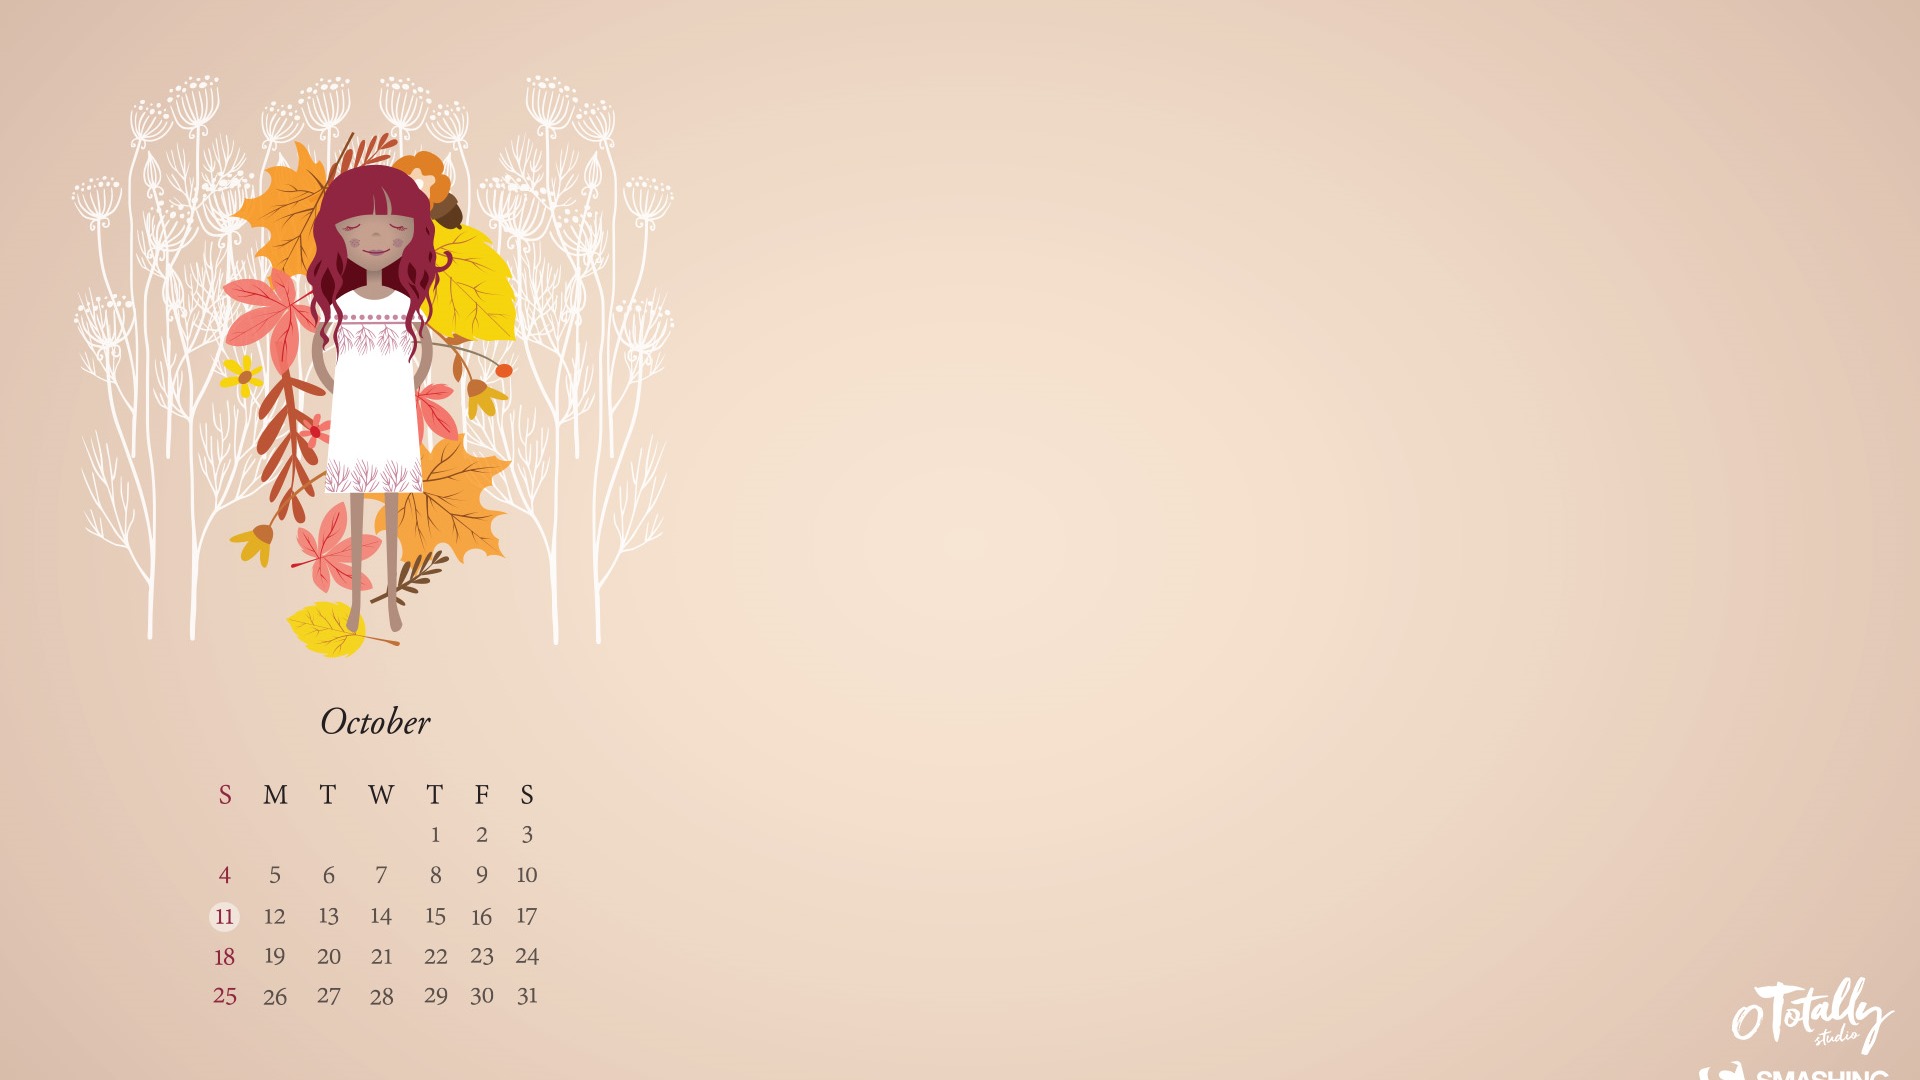 October 2015 calendar wallpaper (2) #15 - 1920x1080